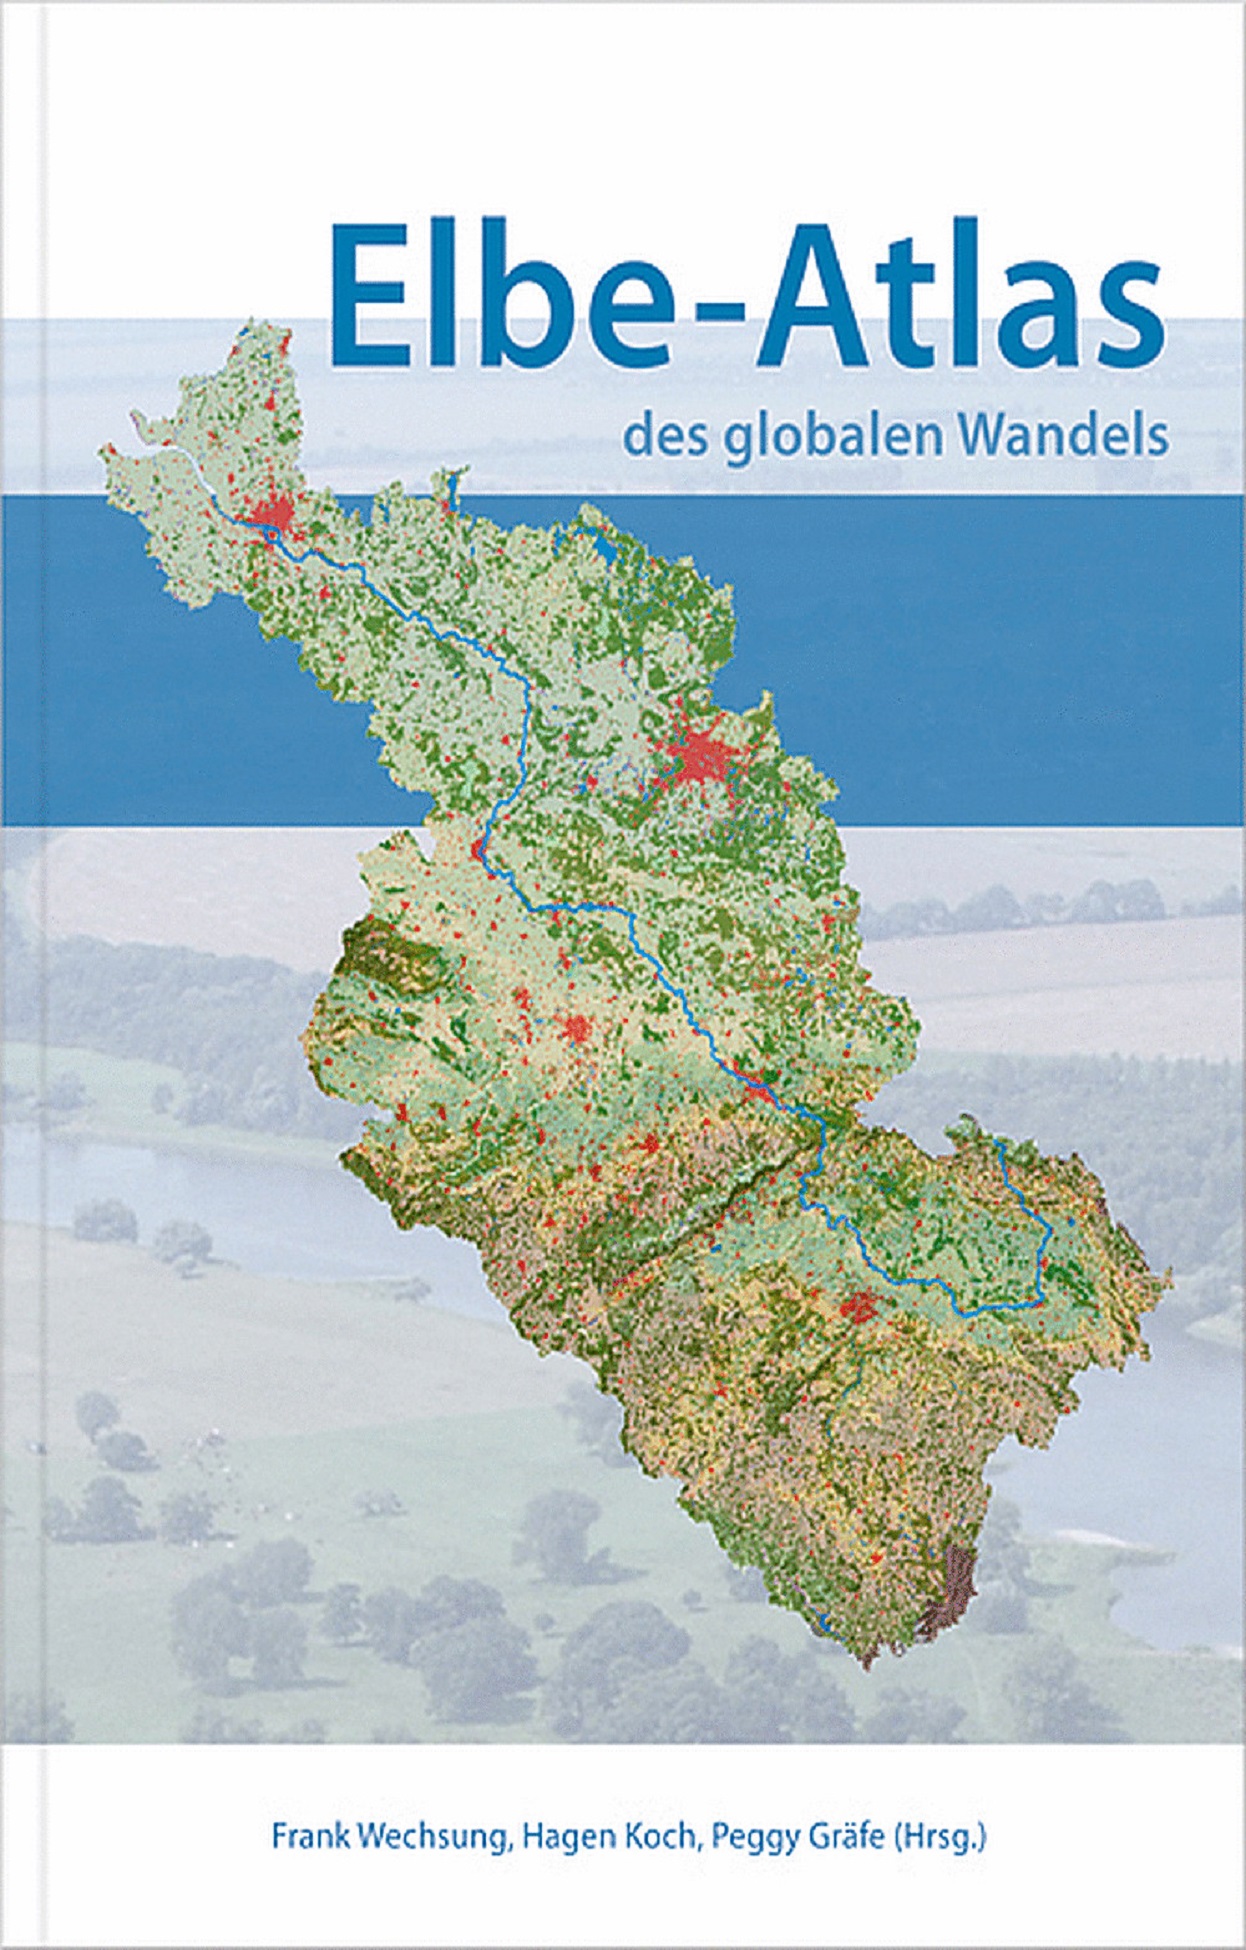 "Elbe Atlas des globalen Wandels"